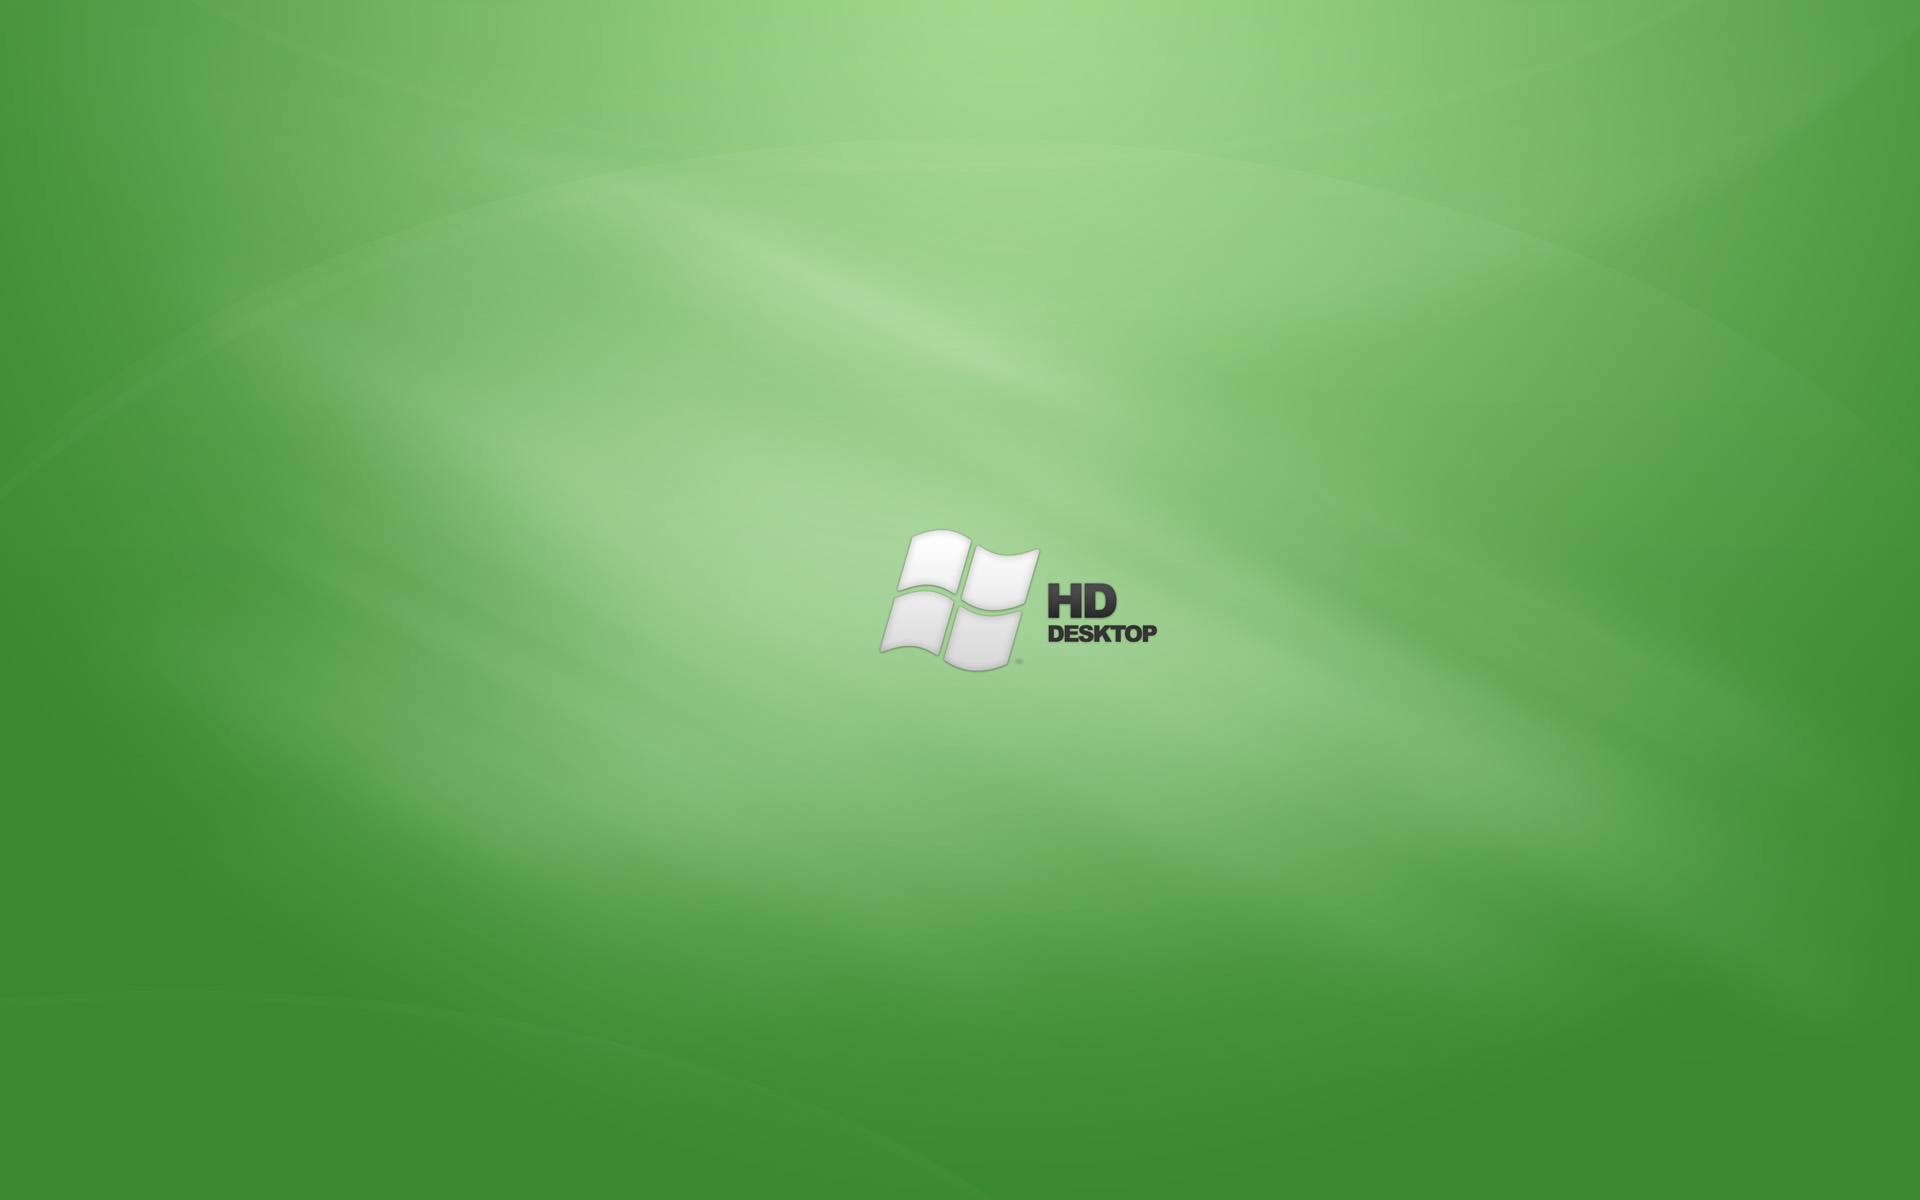 1920x1200 Green HD Desktop desktop PC and Mac wallpaper